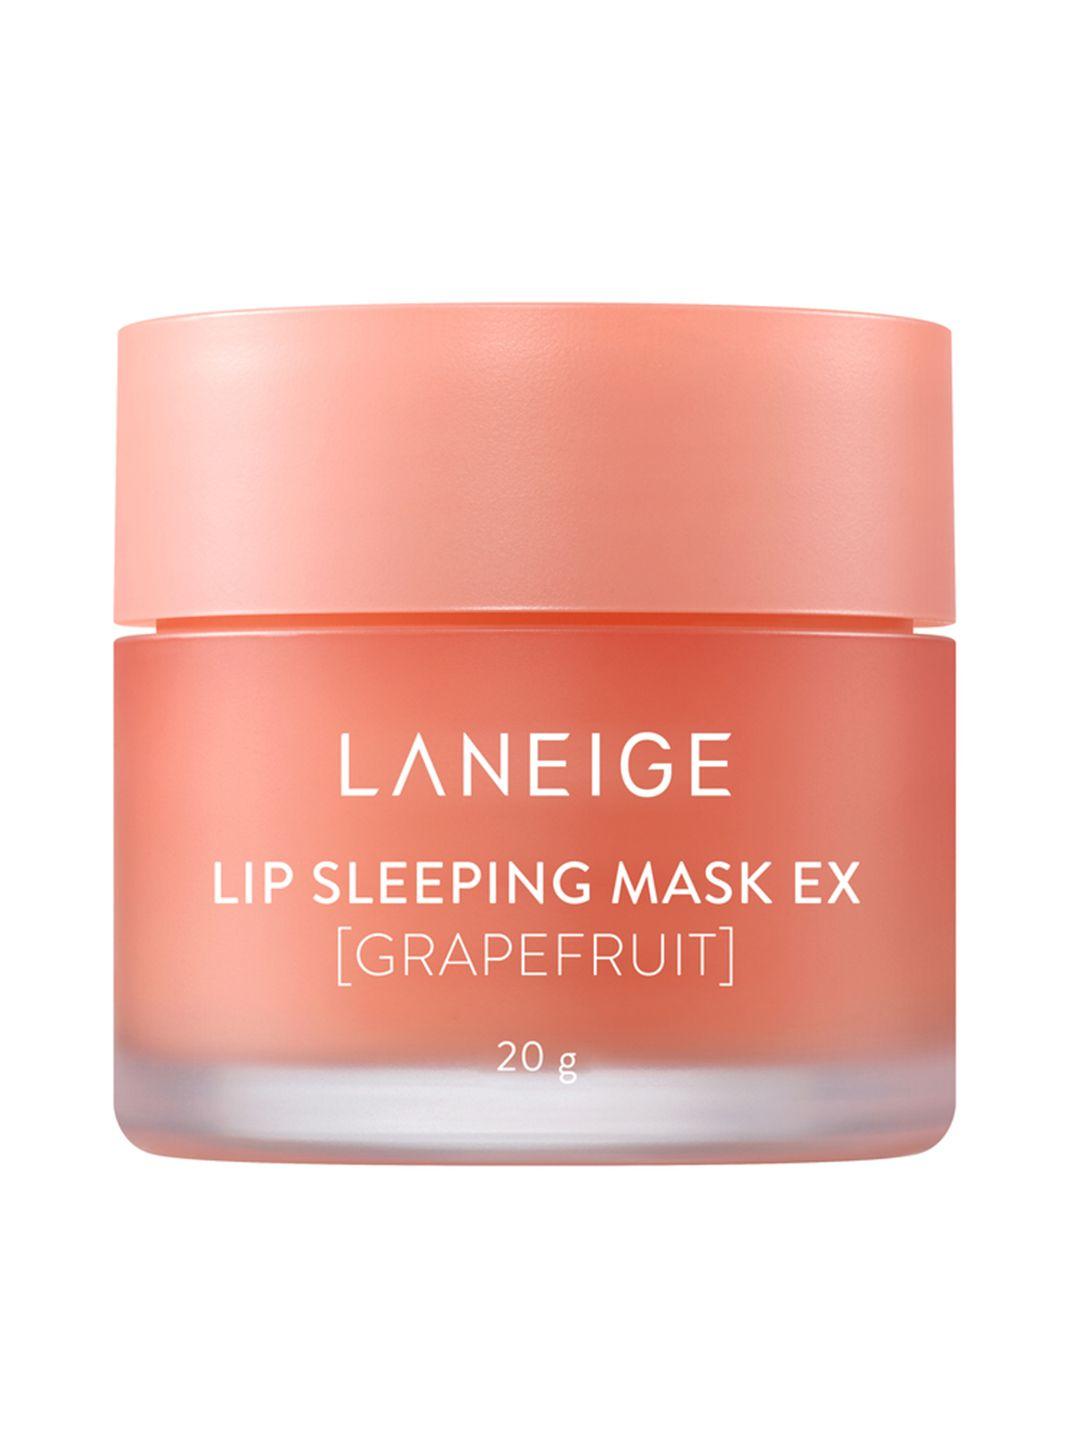 laneige-dermatologist-tested-grapefruit-lip-sleeping-mask-ex-for-8-hour-hydration---20-g